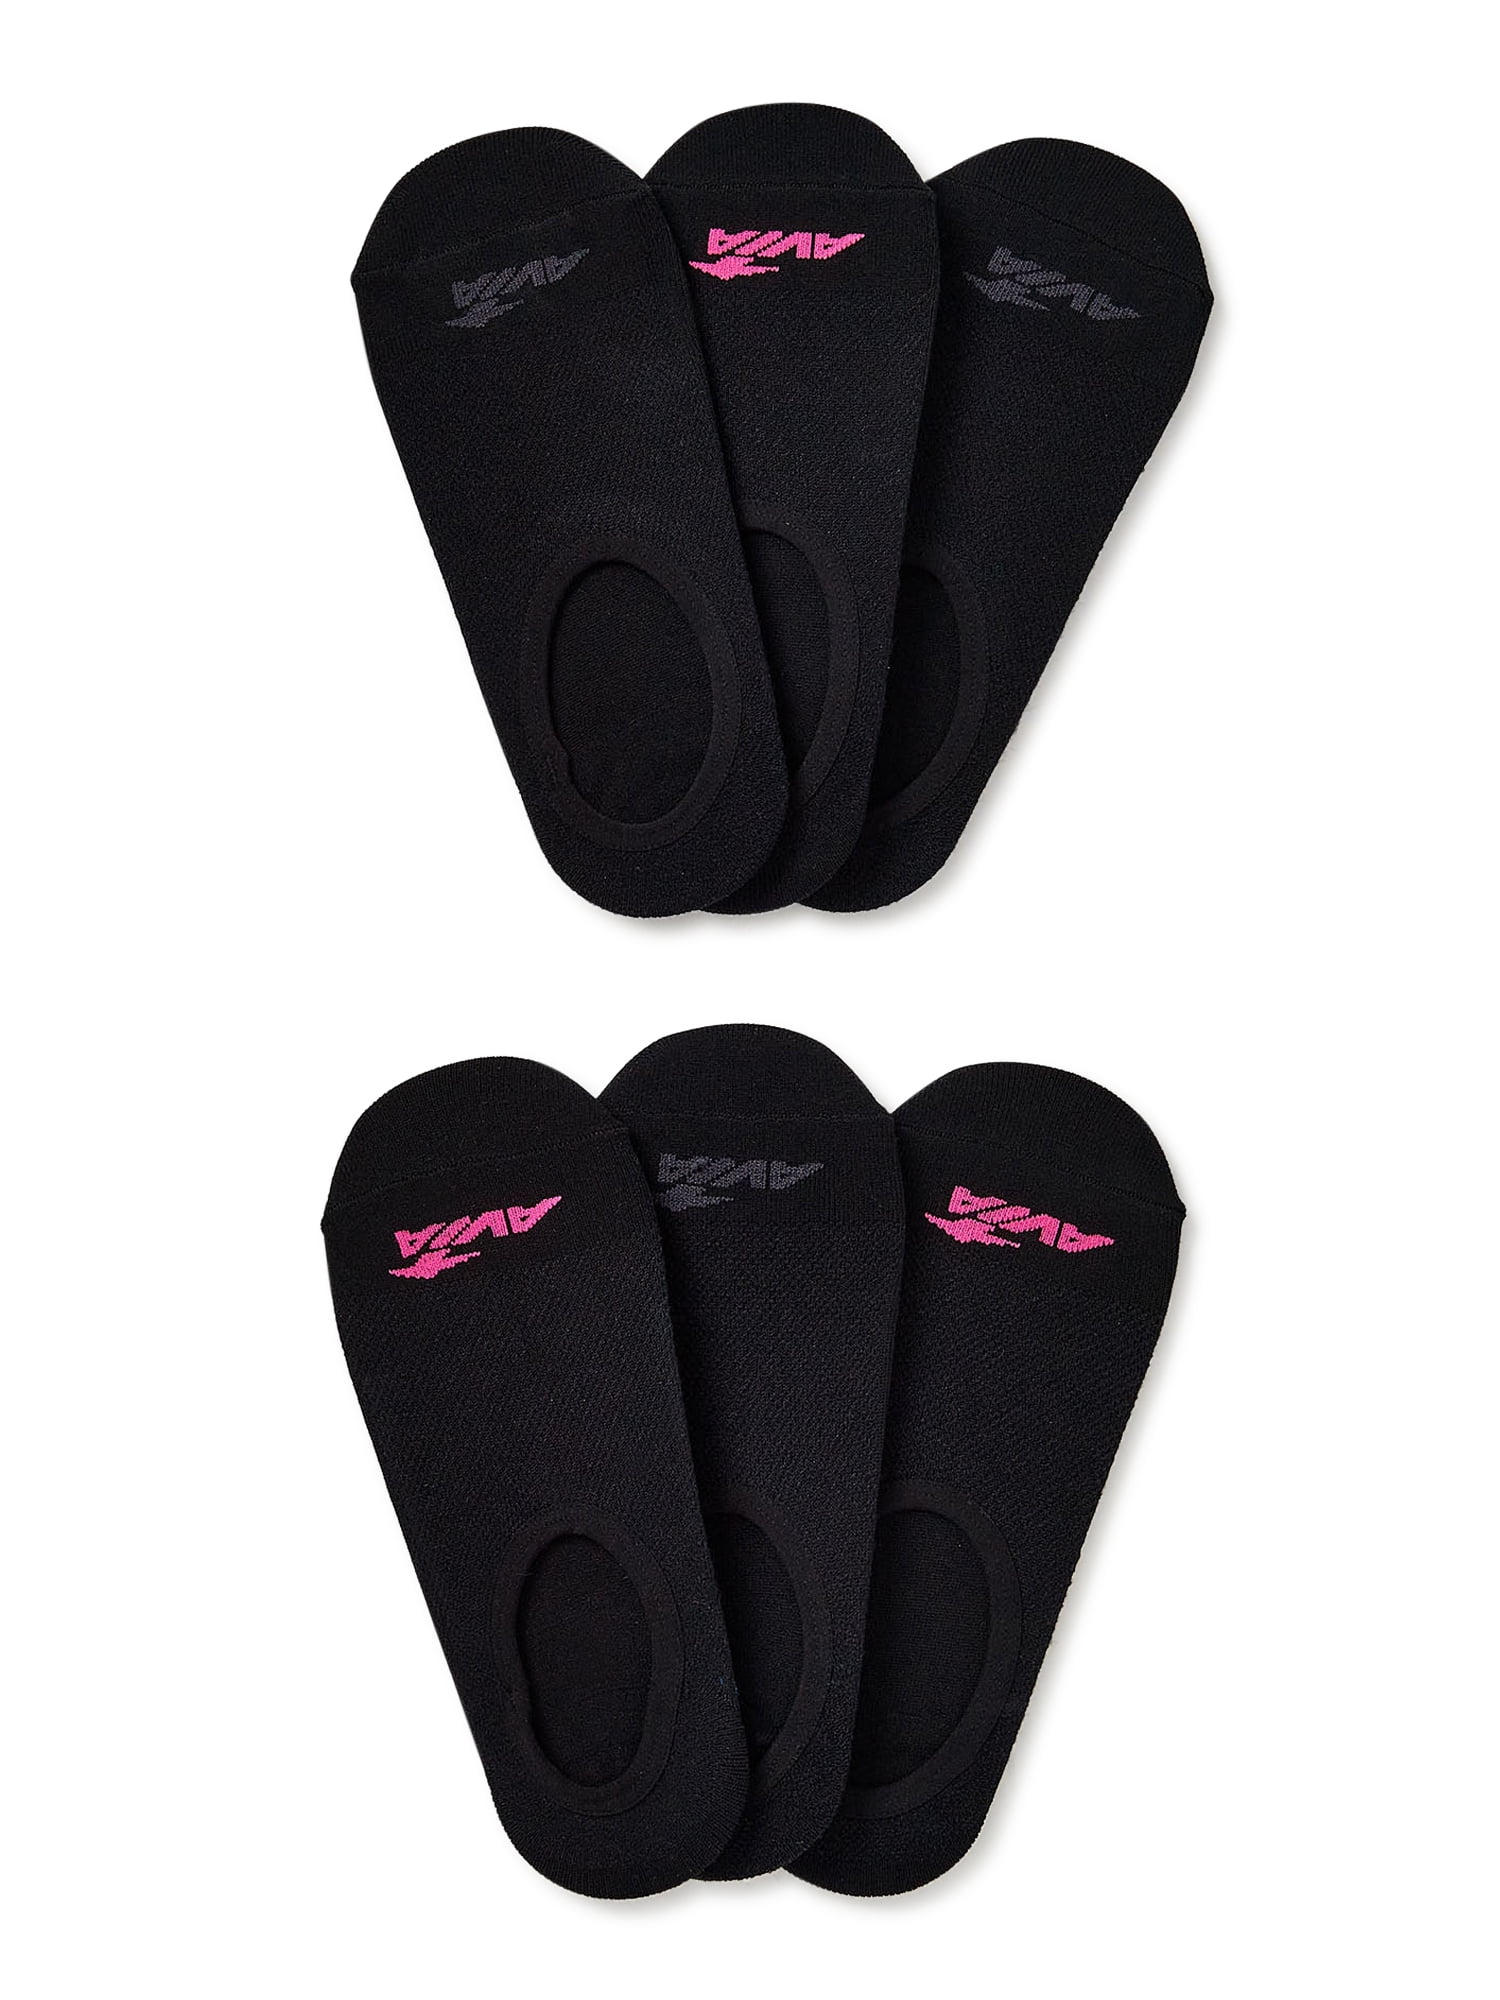 Avia Women's Micro Performance Sport No Show Liner Socks, 6